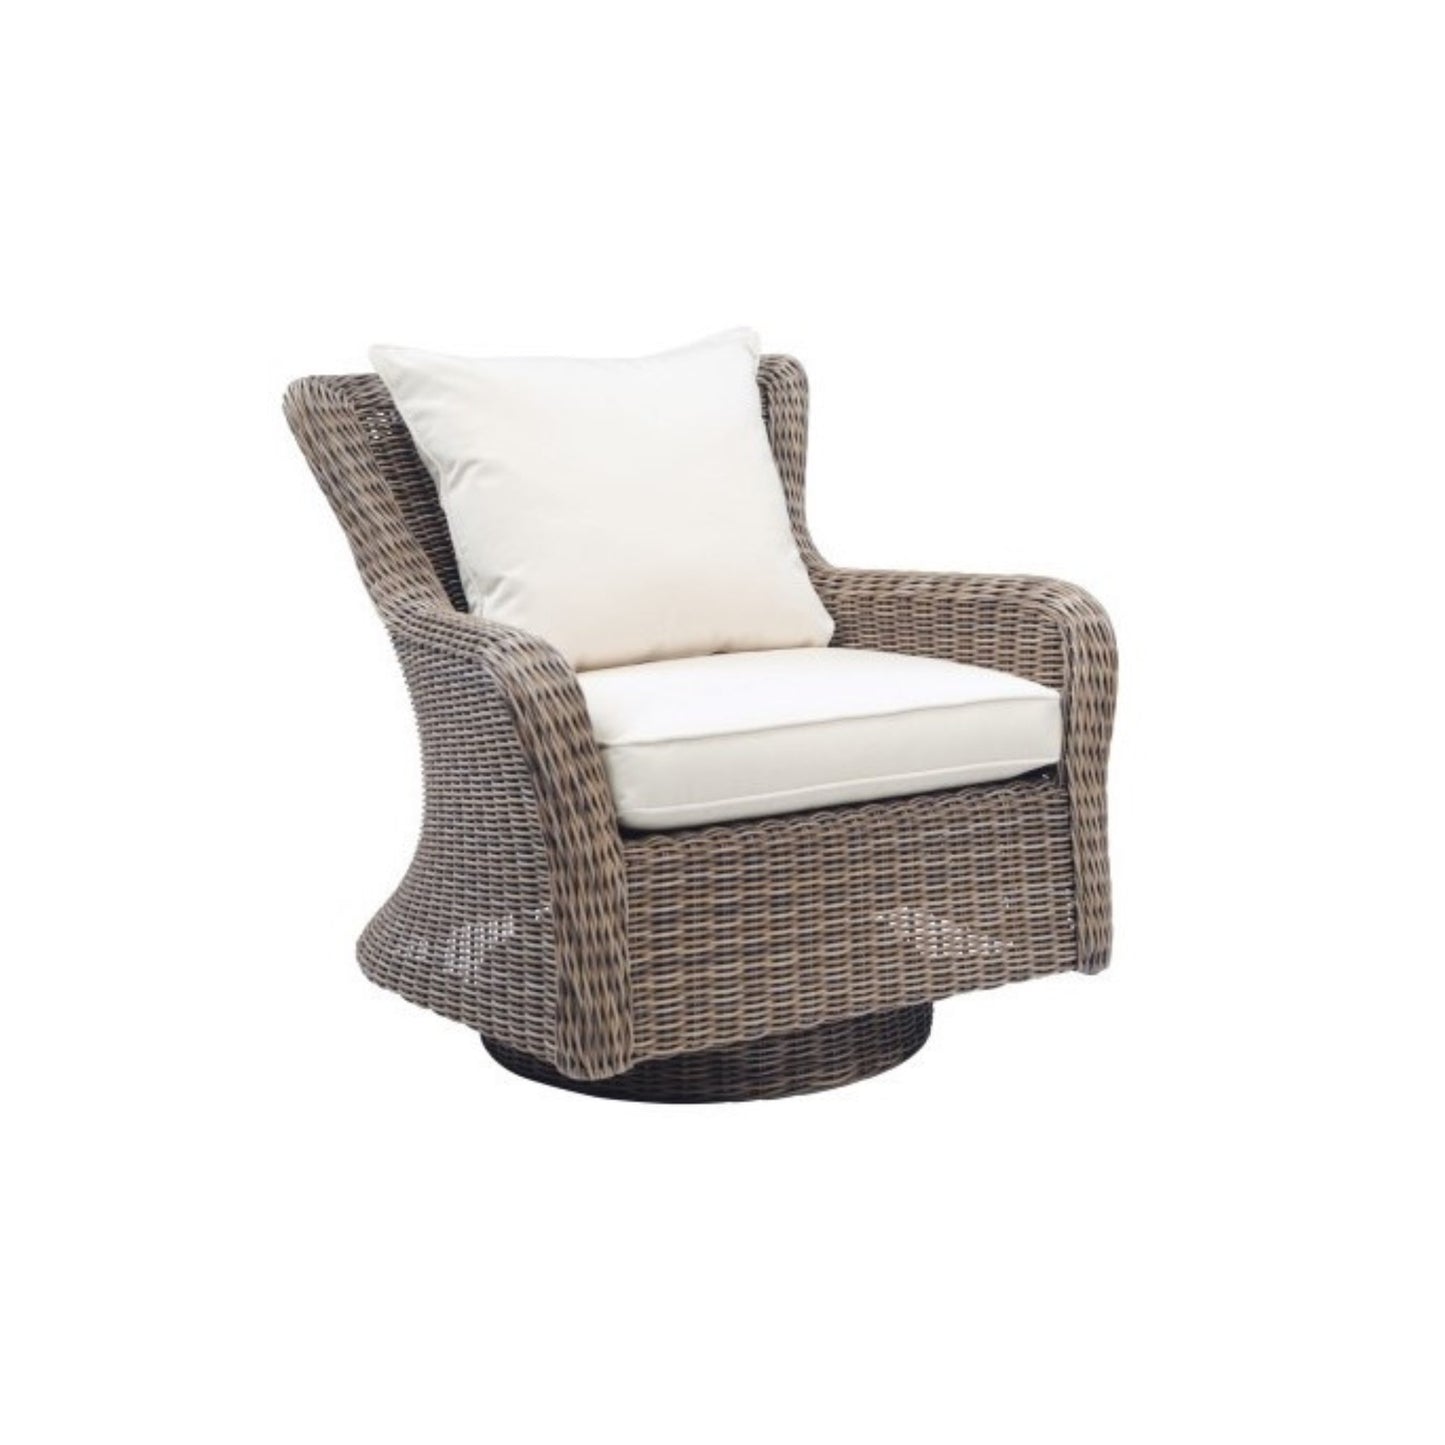 Sag Harbor Wicker Deep Seating Swivel Rocker Lounge Chair